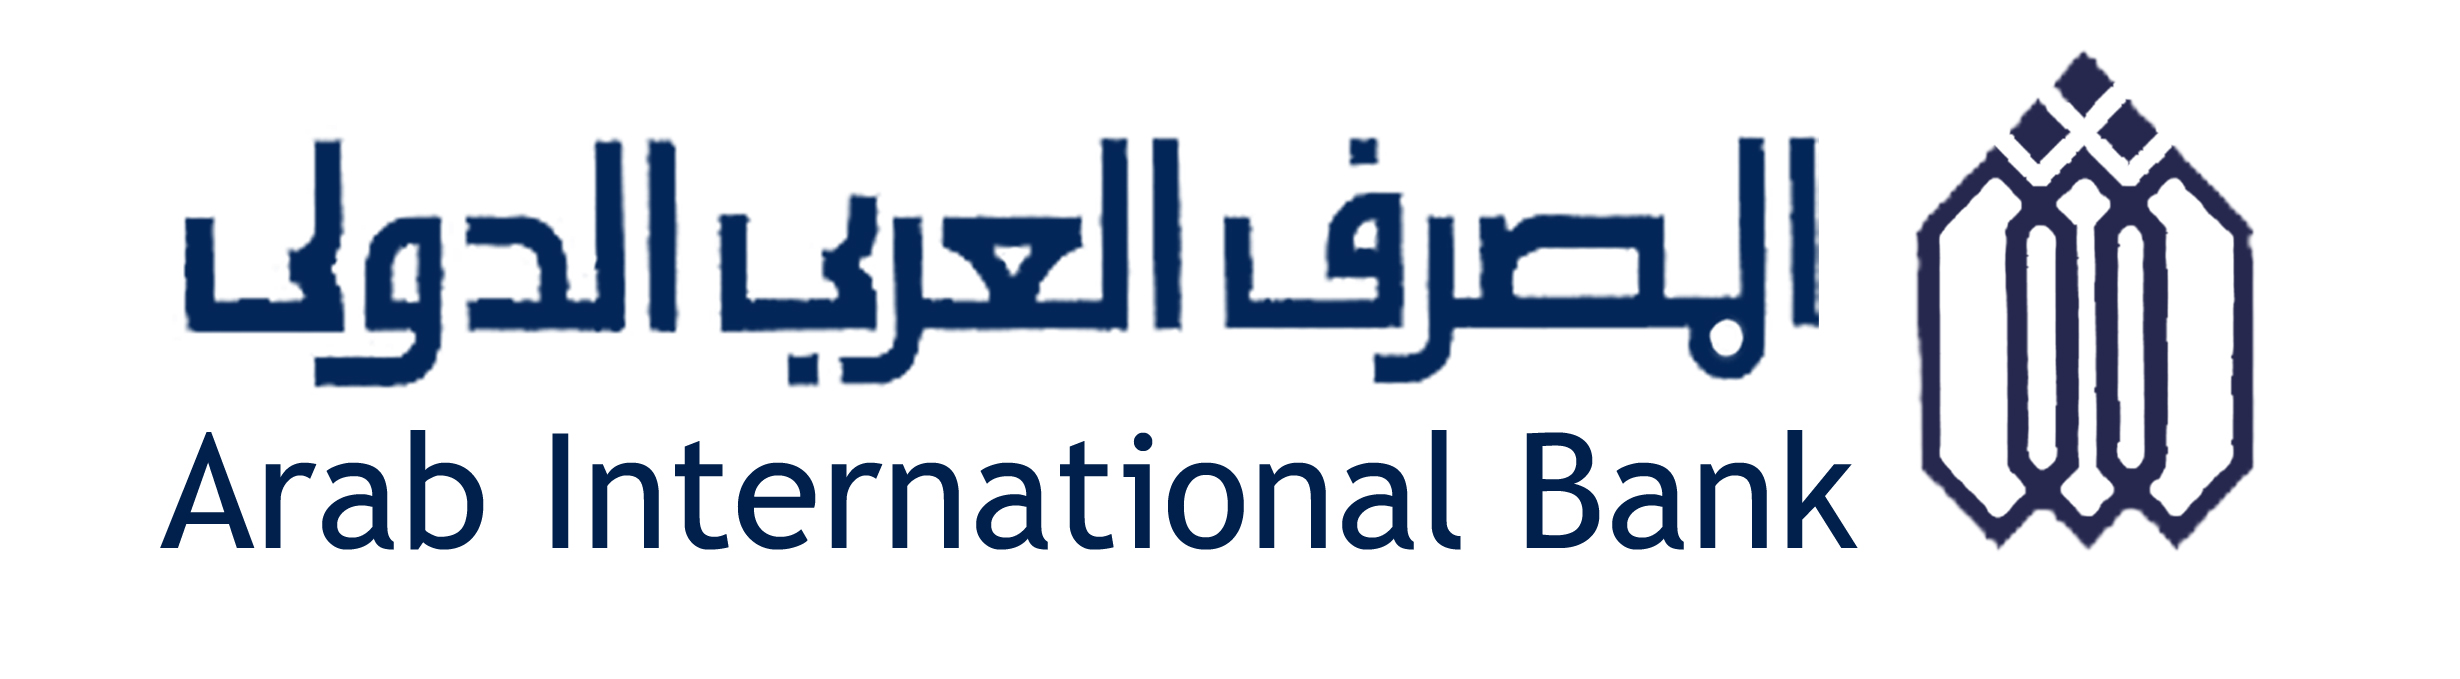 28-arab-international-bank